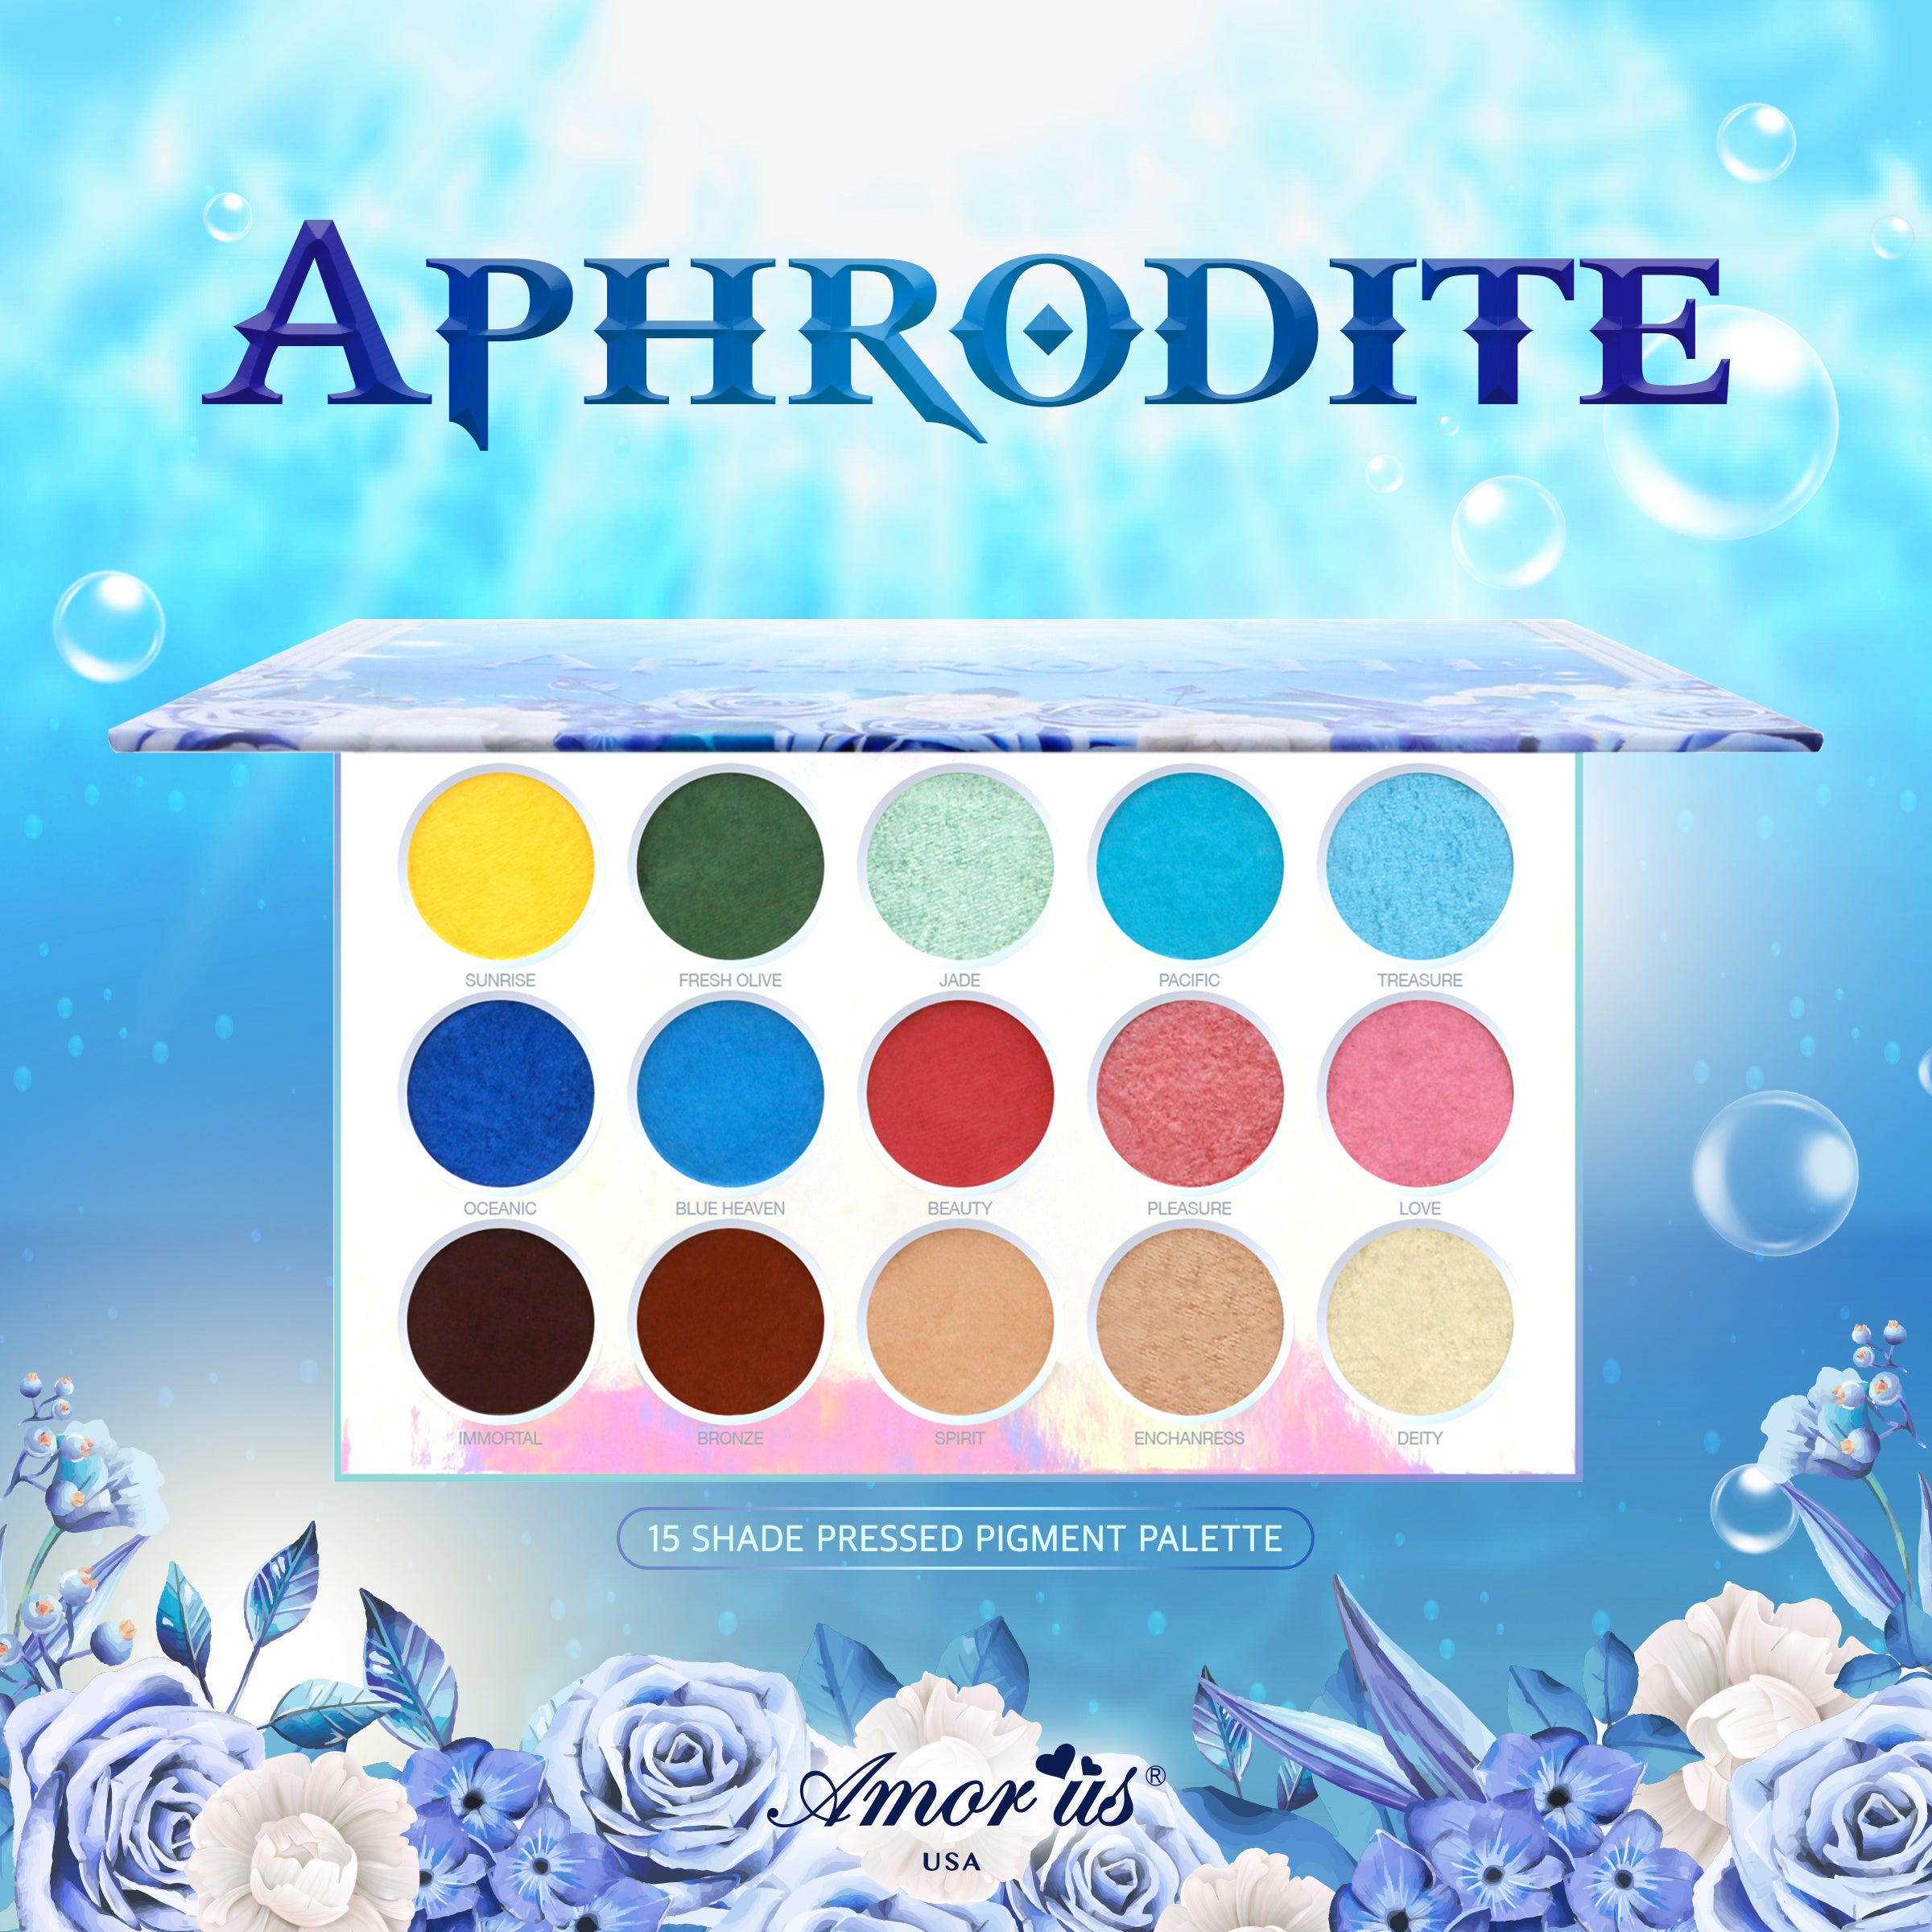 Aphrodite Pressed Pigment Palette